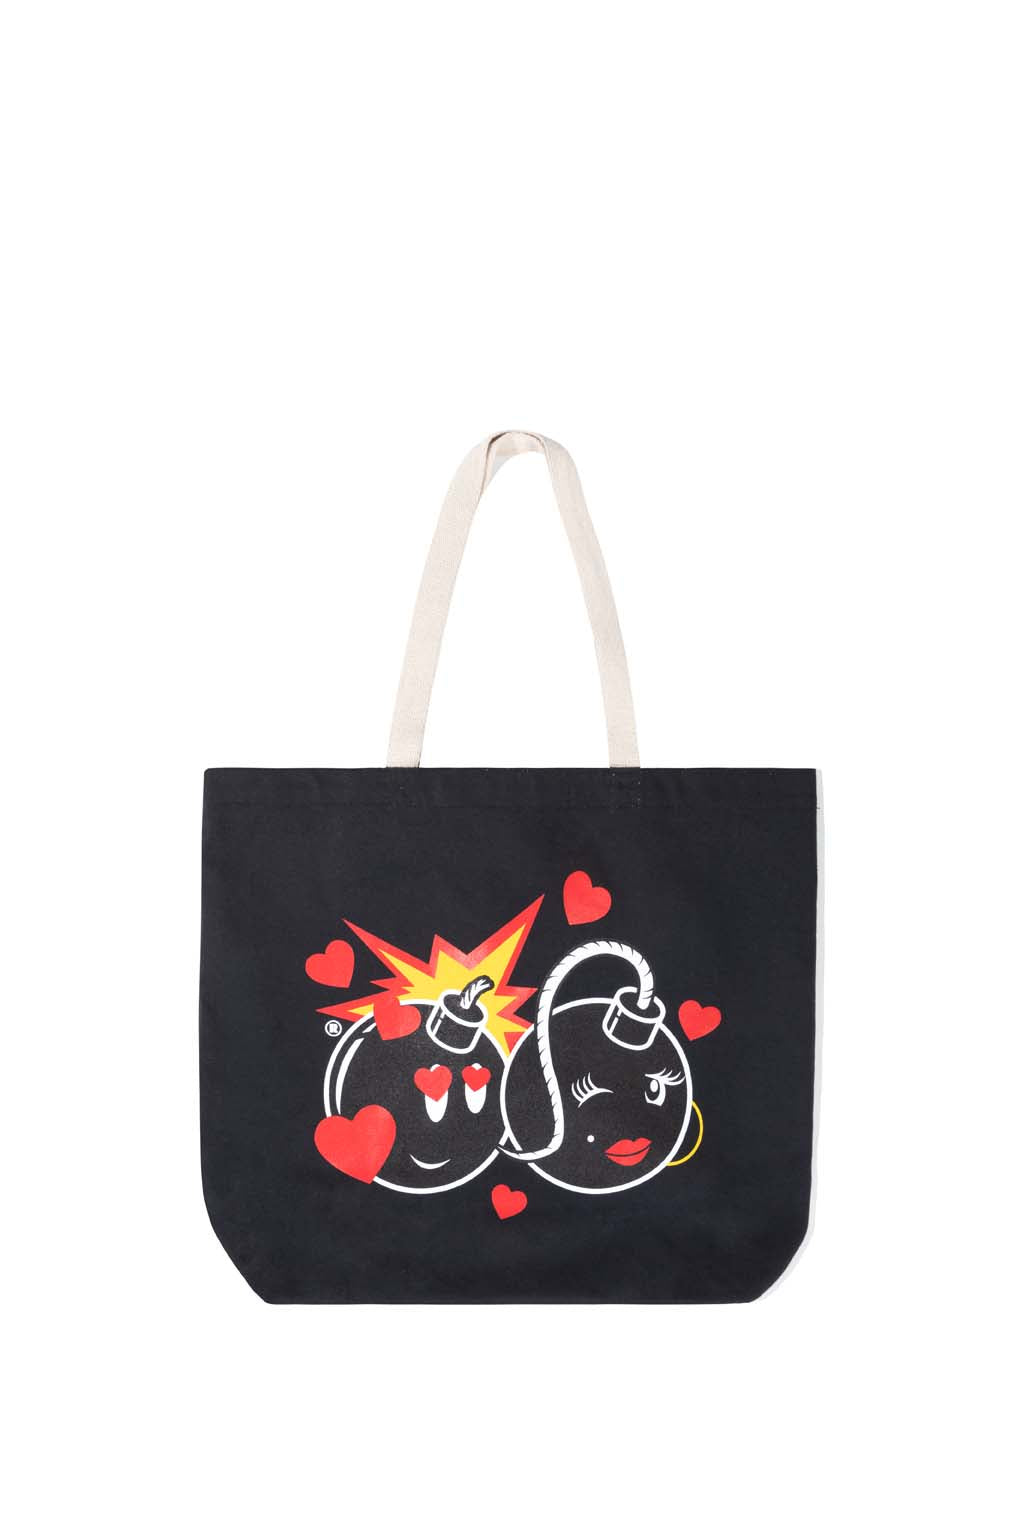 Image of In Love Tote Bag